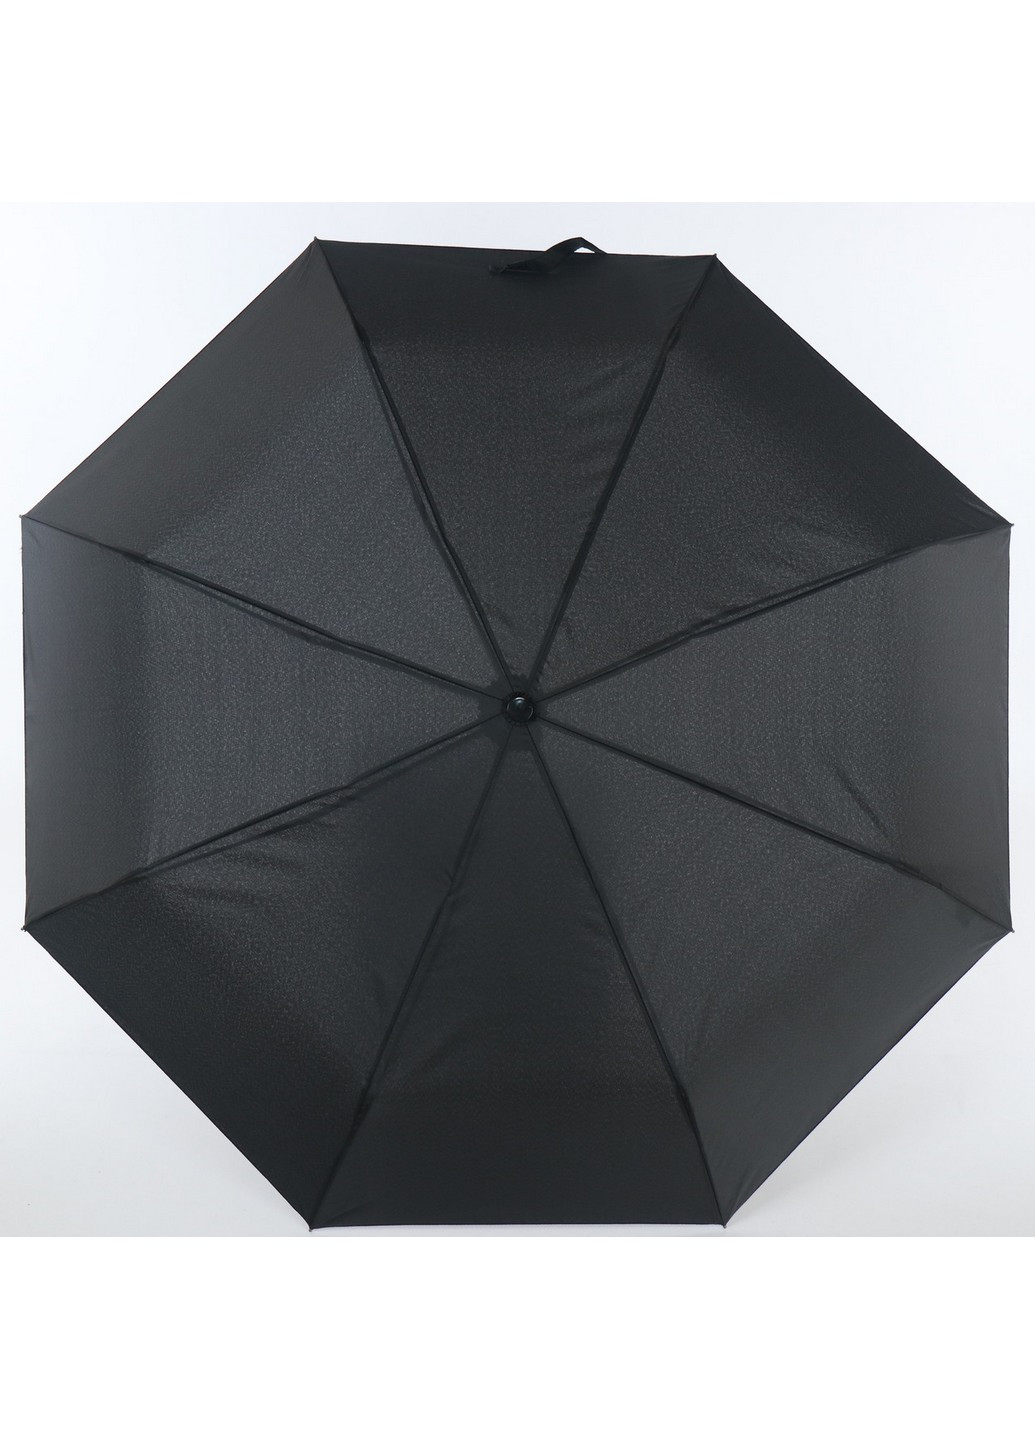 Зонт мужской автомат 99 см ArtRain (255405335)